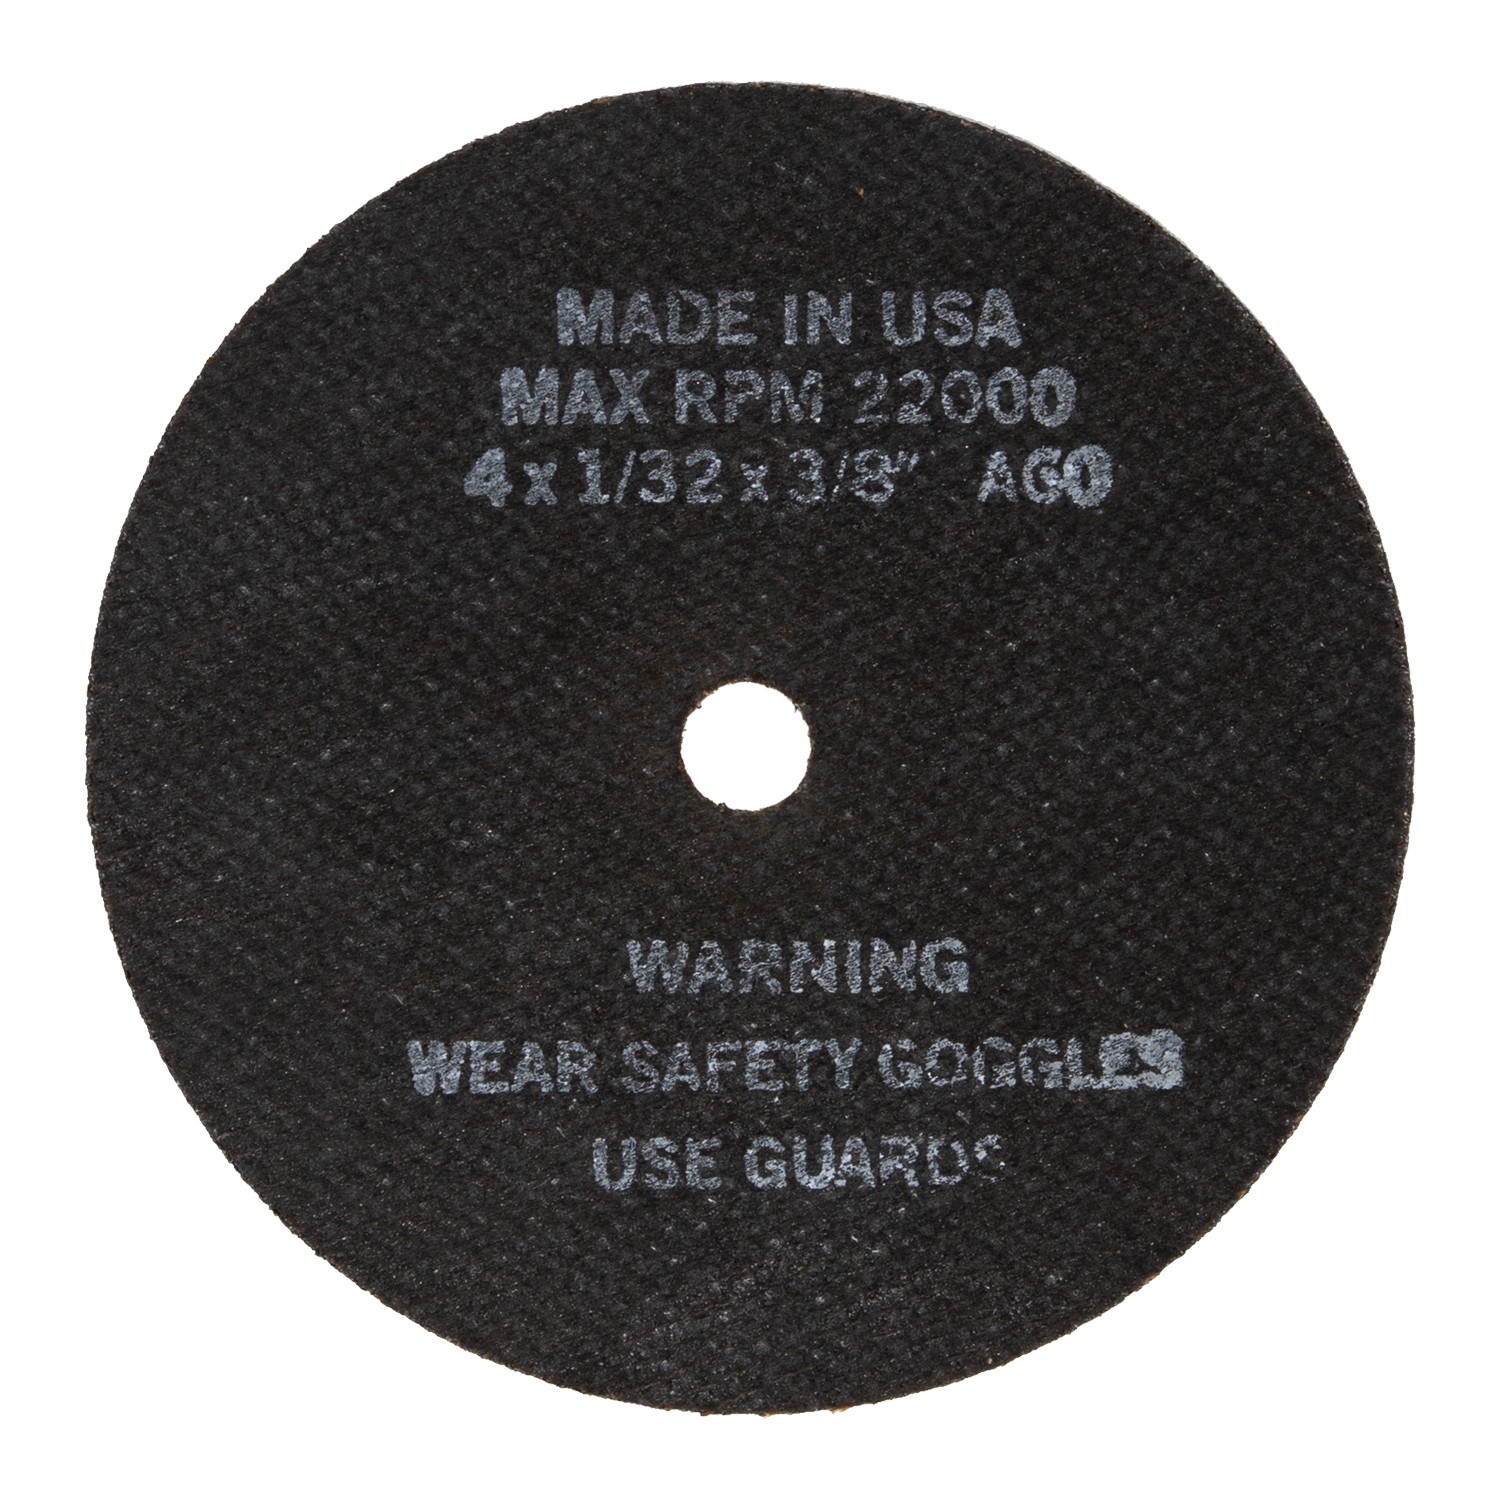 4" x 1/32" Type 1 Industrial Grade Metal Cut-Off Wheel - 5 Pack Carded